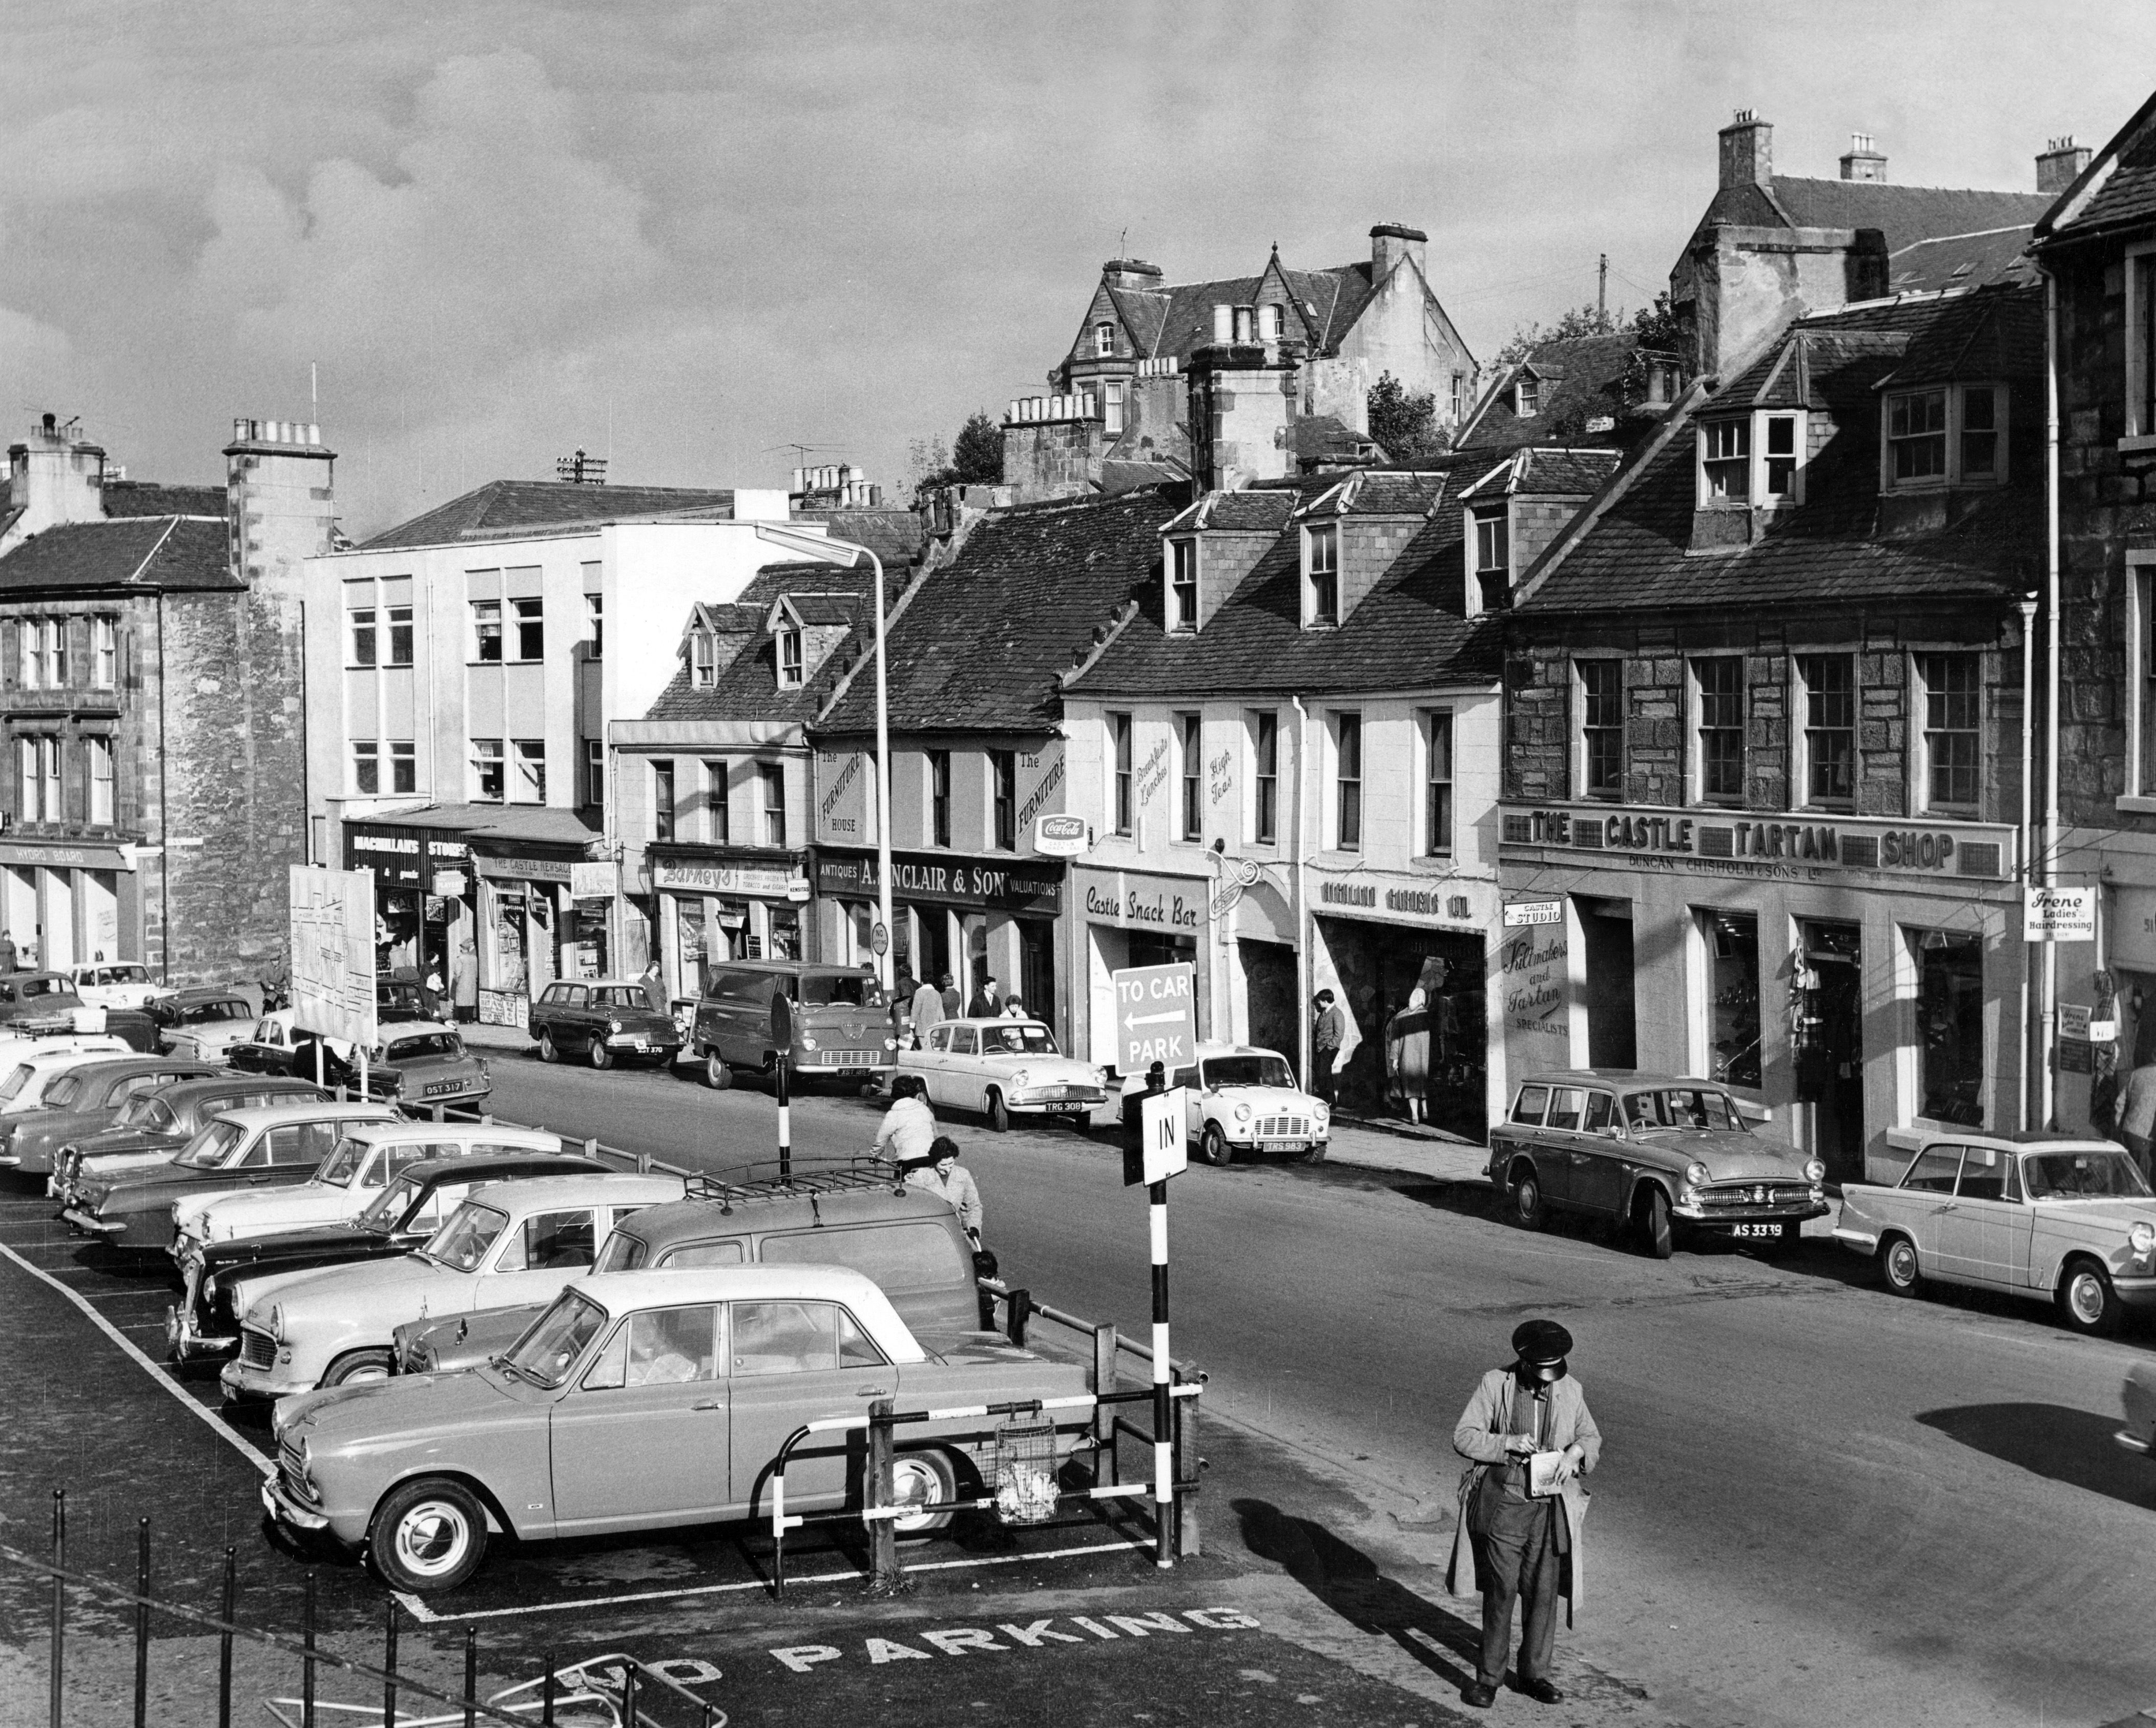 Inverness Castle Street in October 1964